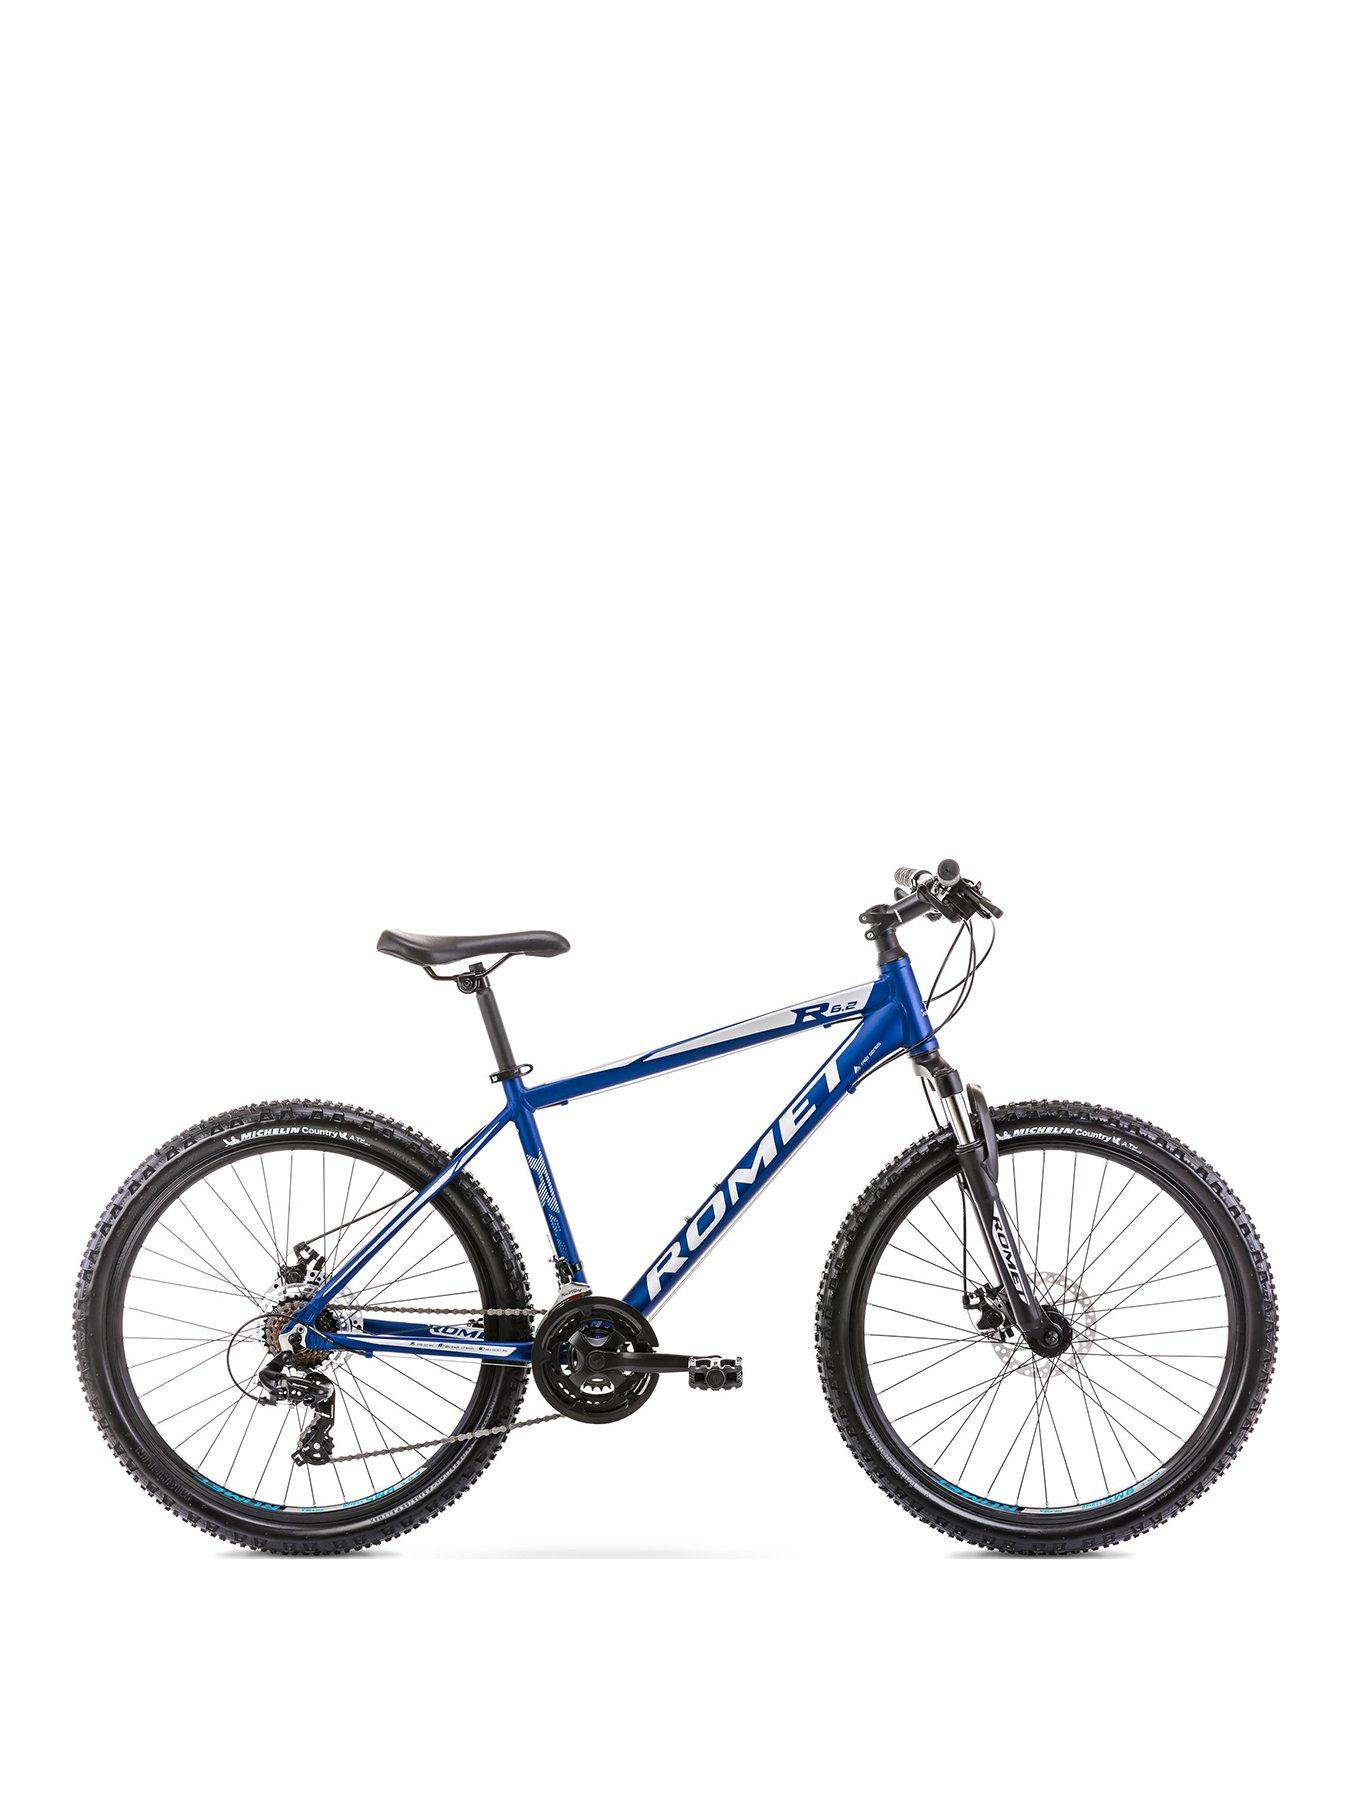 19 frame mountain bike